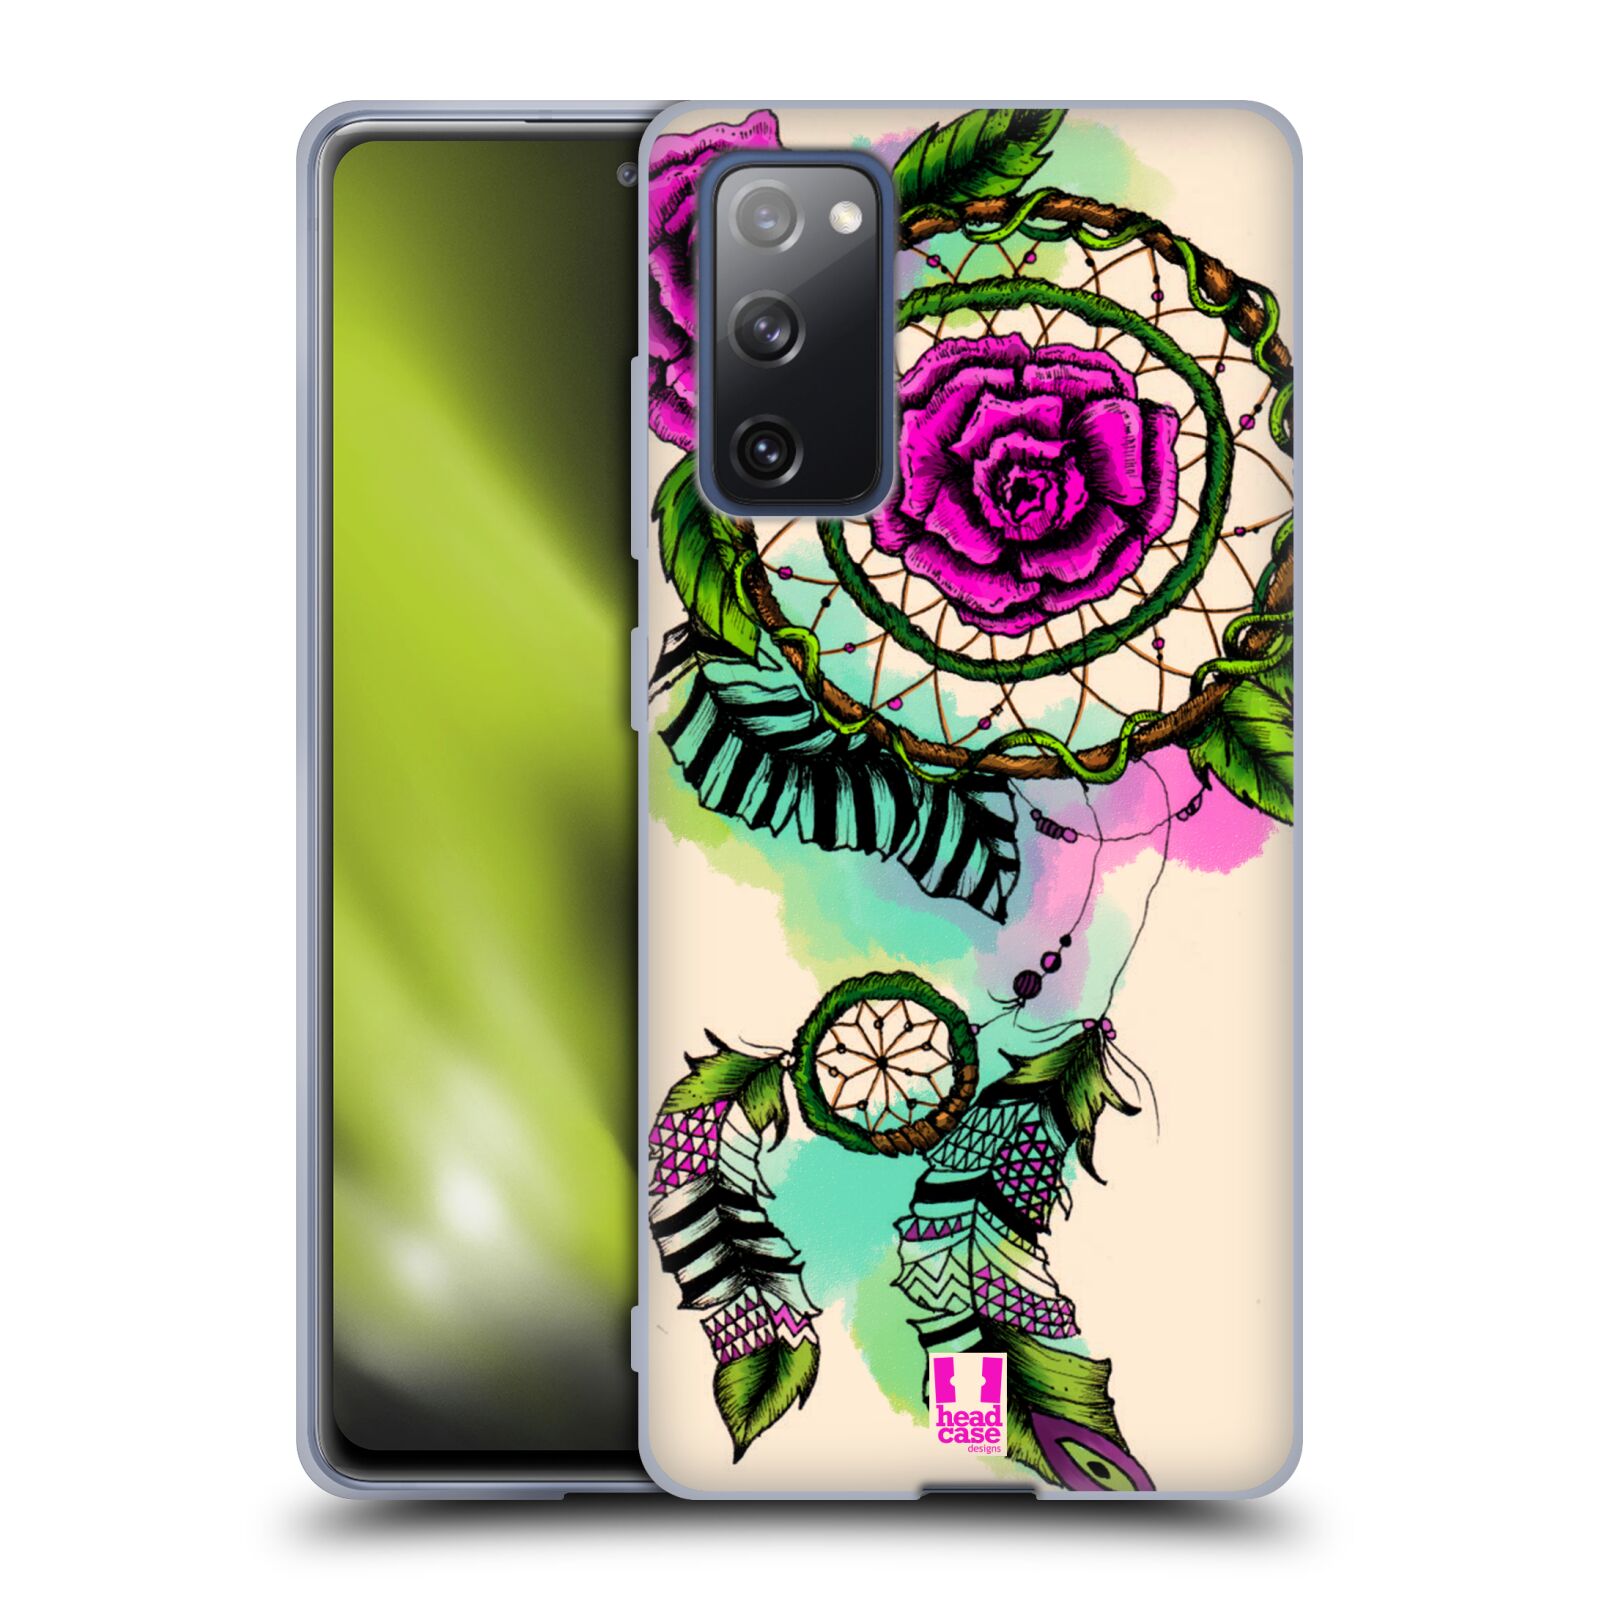 Plastový obal HEAD CASE na mobil Samsung Galaxy S20 FE / S20 FE 5G vzor Květy lapač snů růže